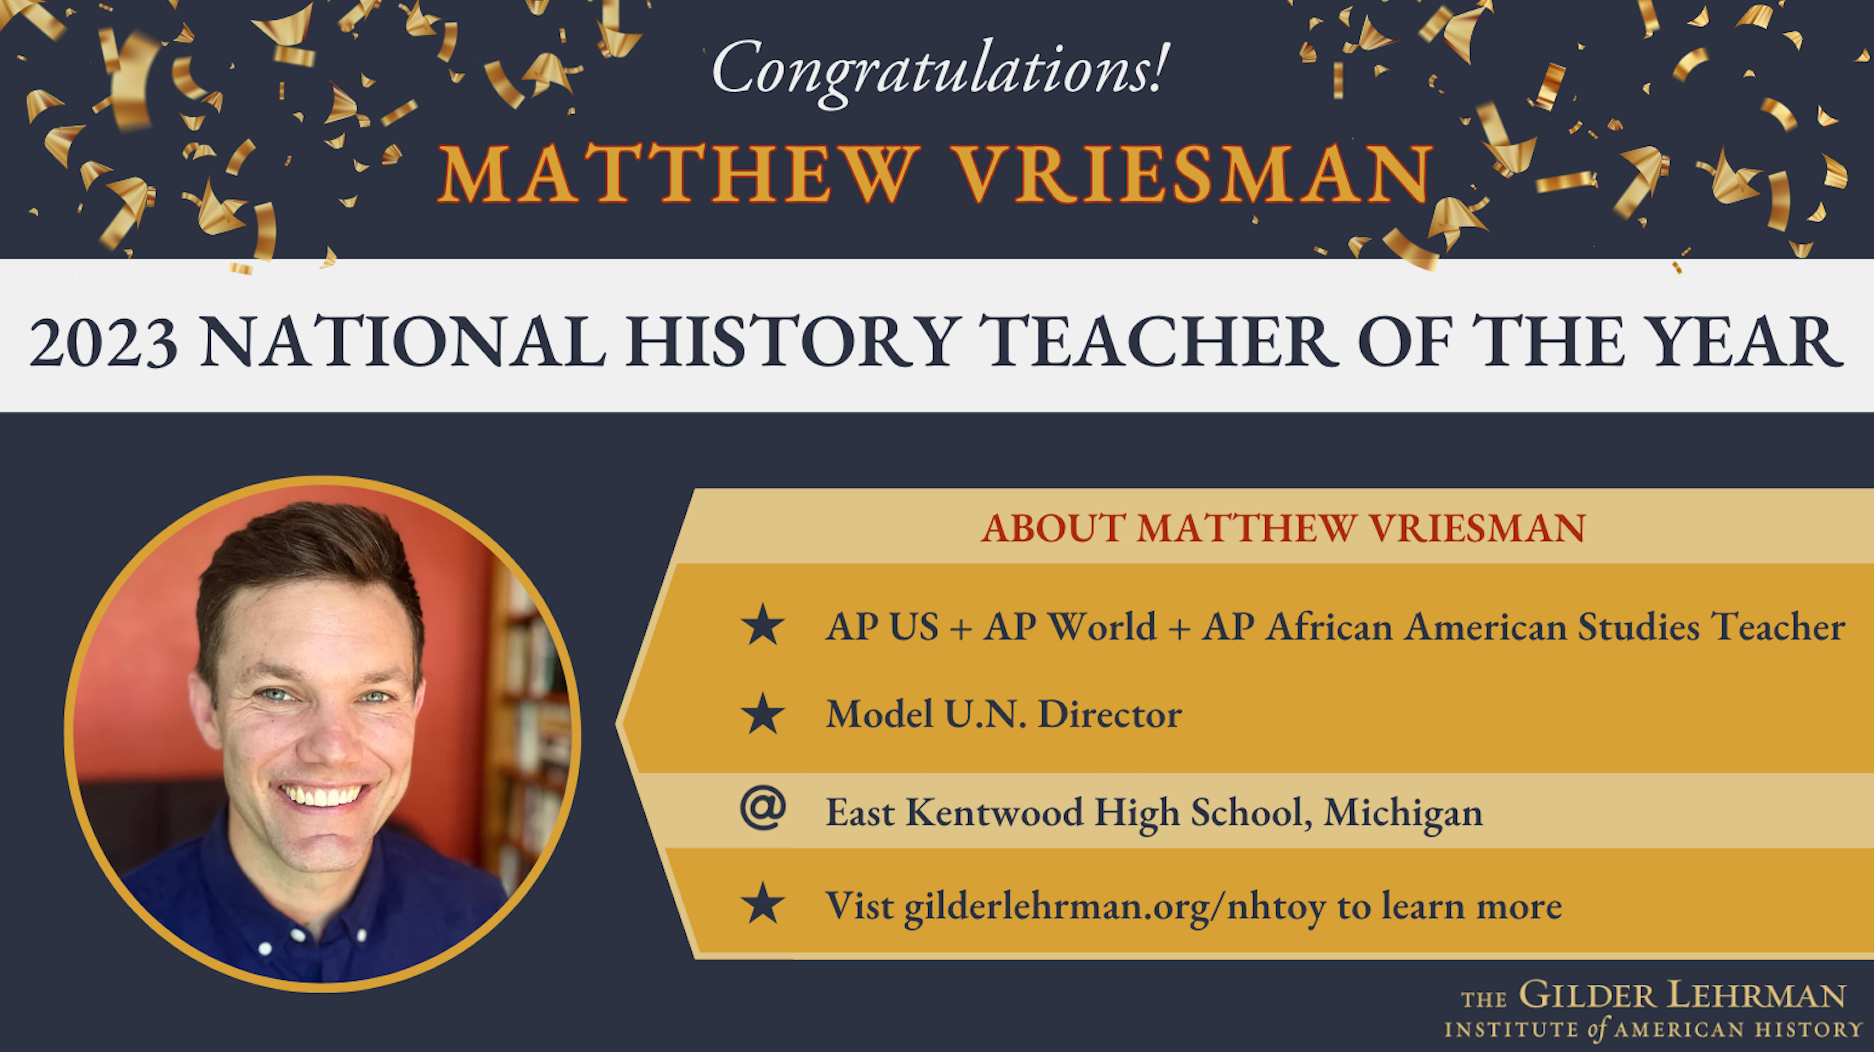 Matthew Vriesman, 2023 National History Teacher of the Year